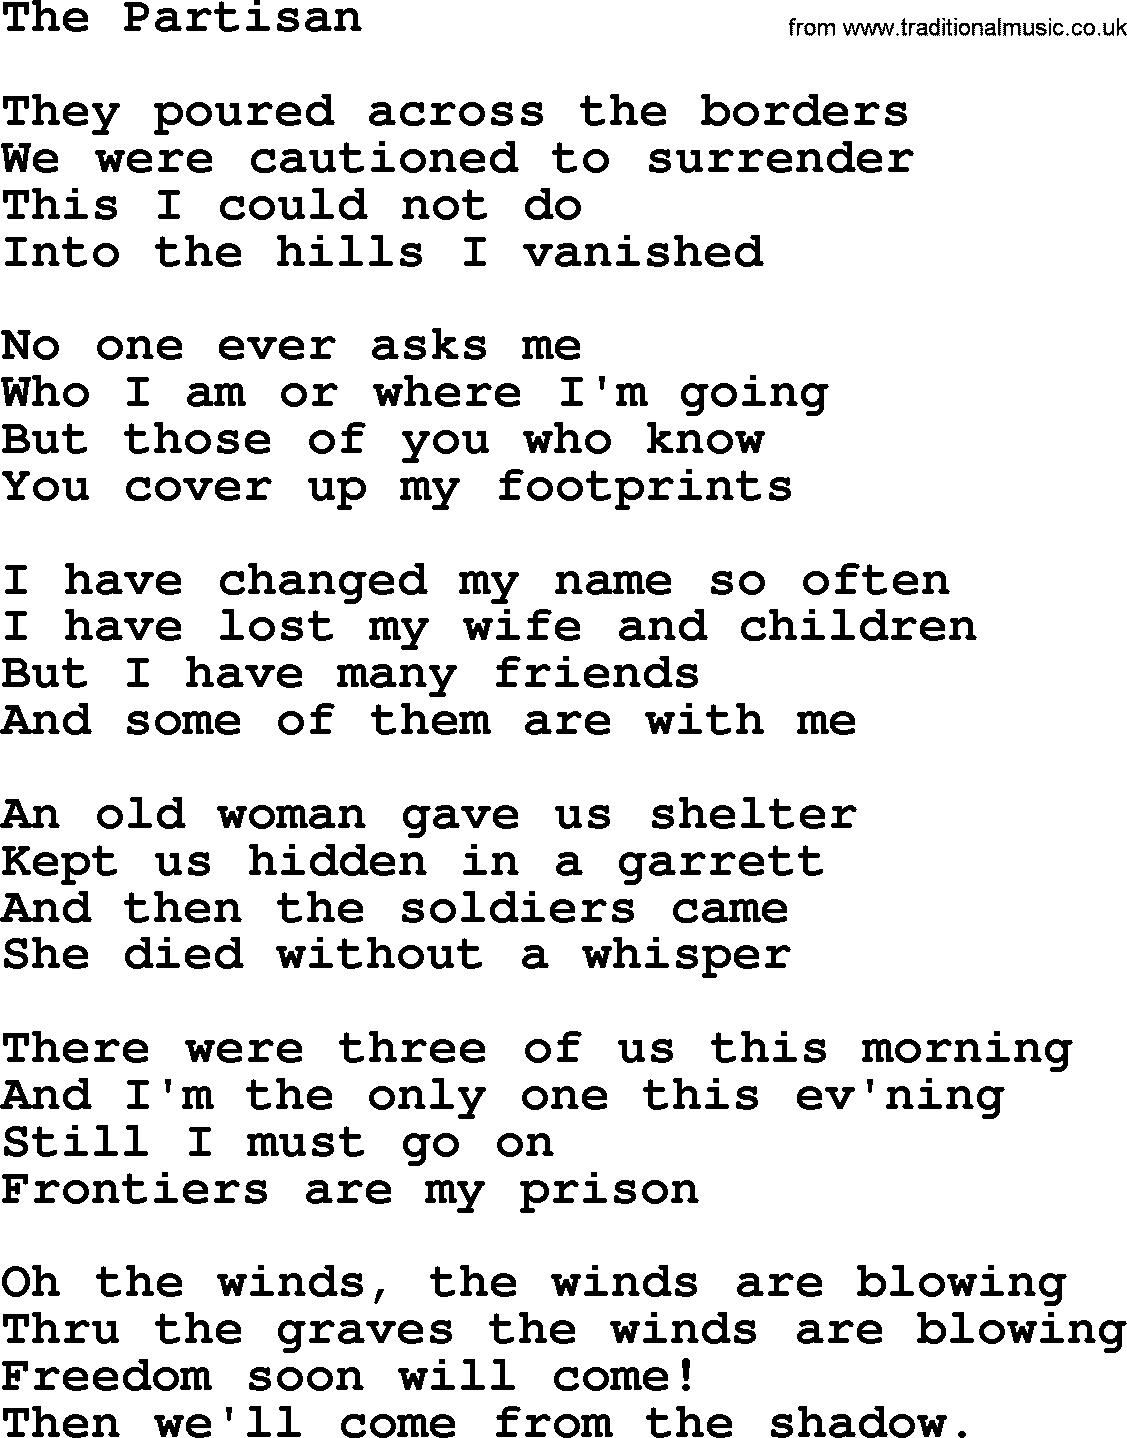 Joan Baez song The Partisan, lyrics